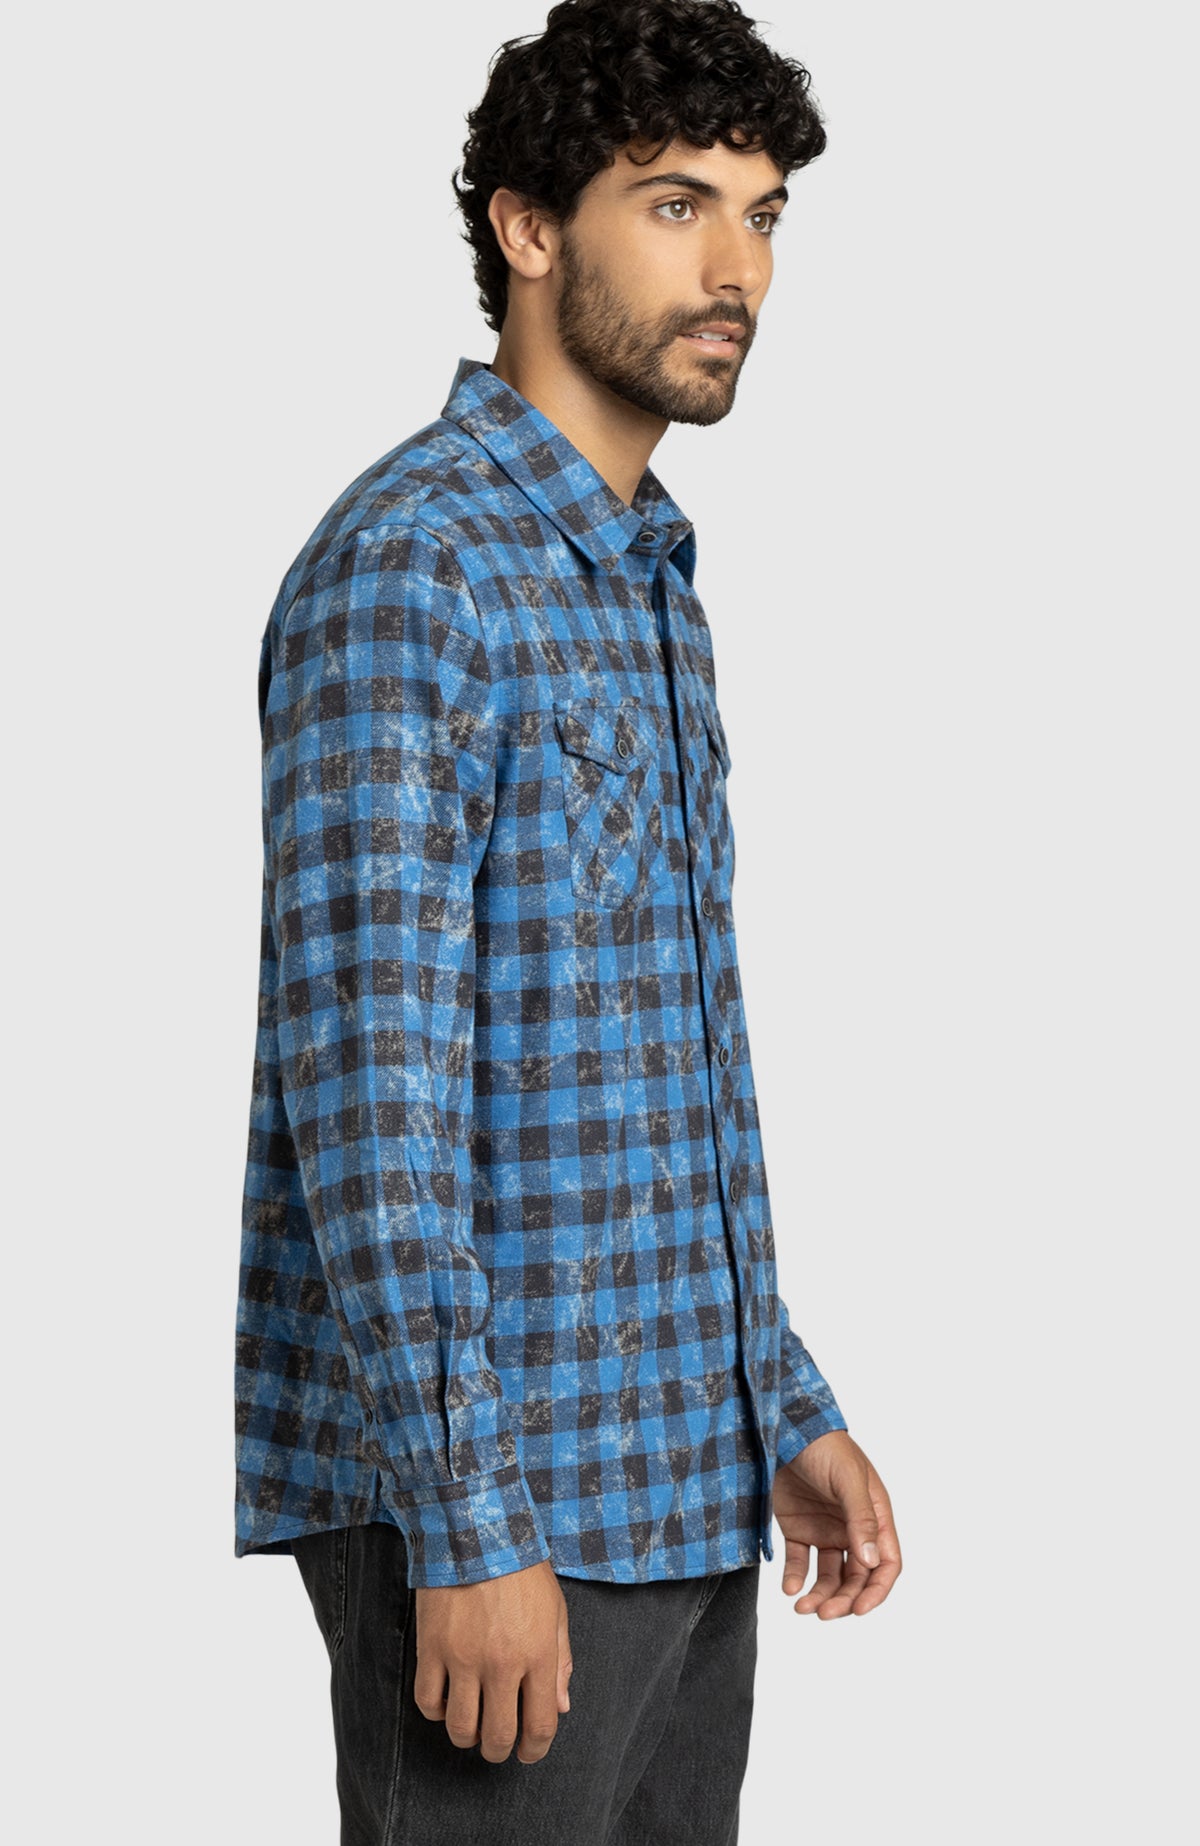 Federal Blue Plaid Flannel Shirt for Men - Side